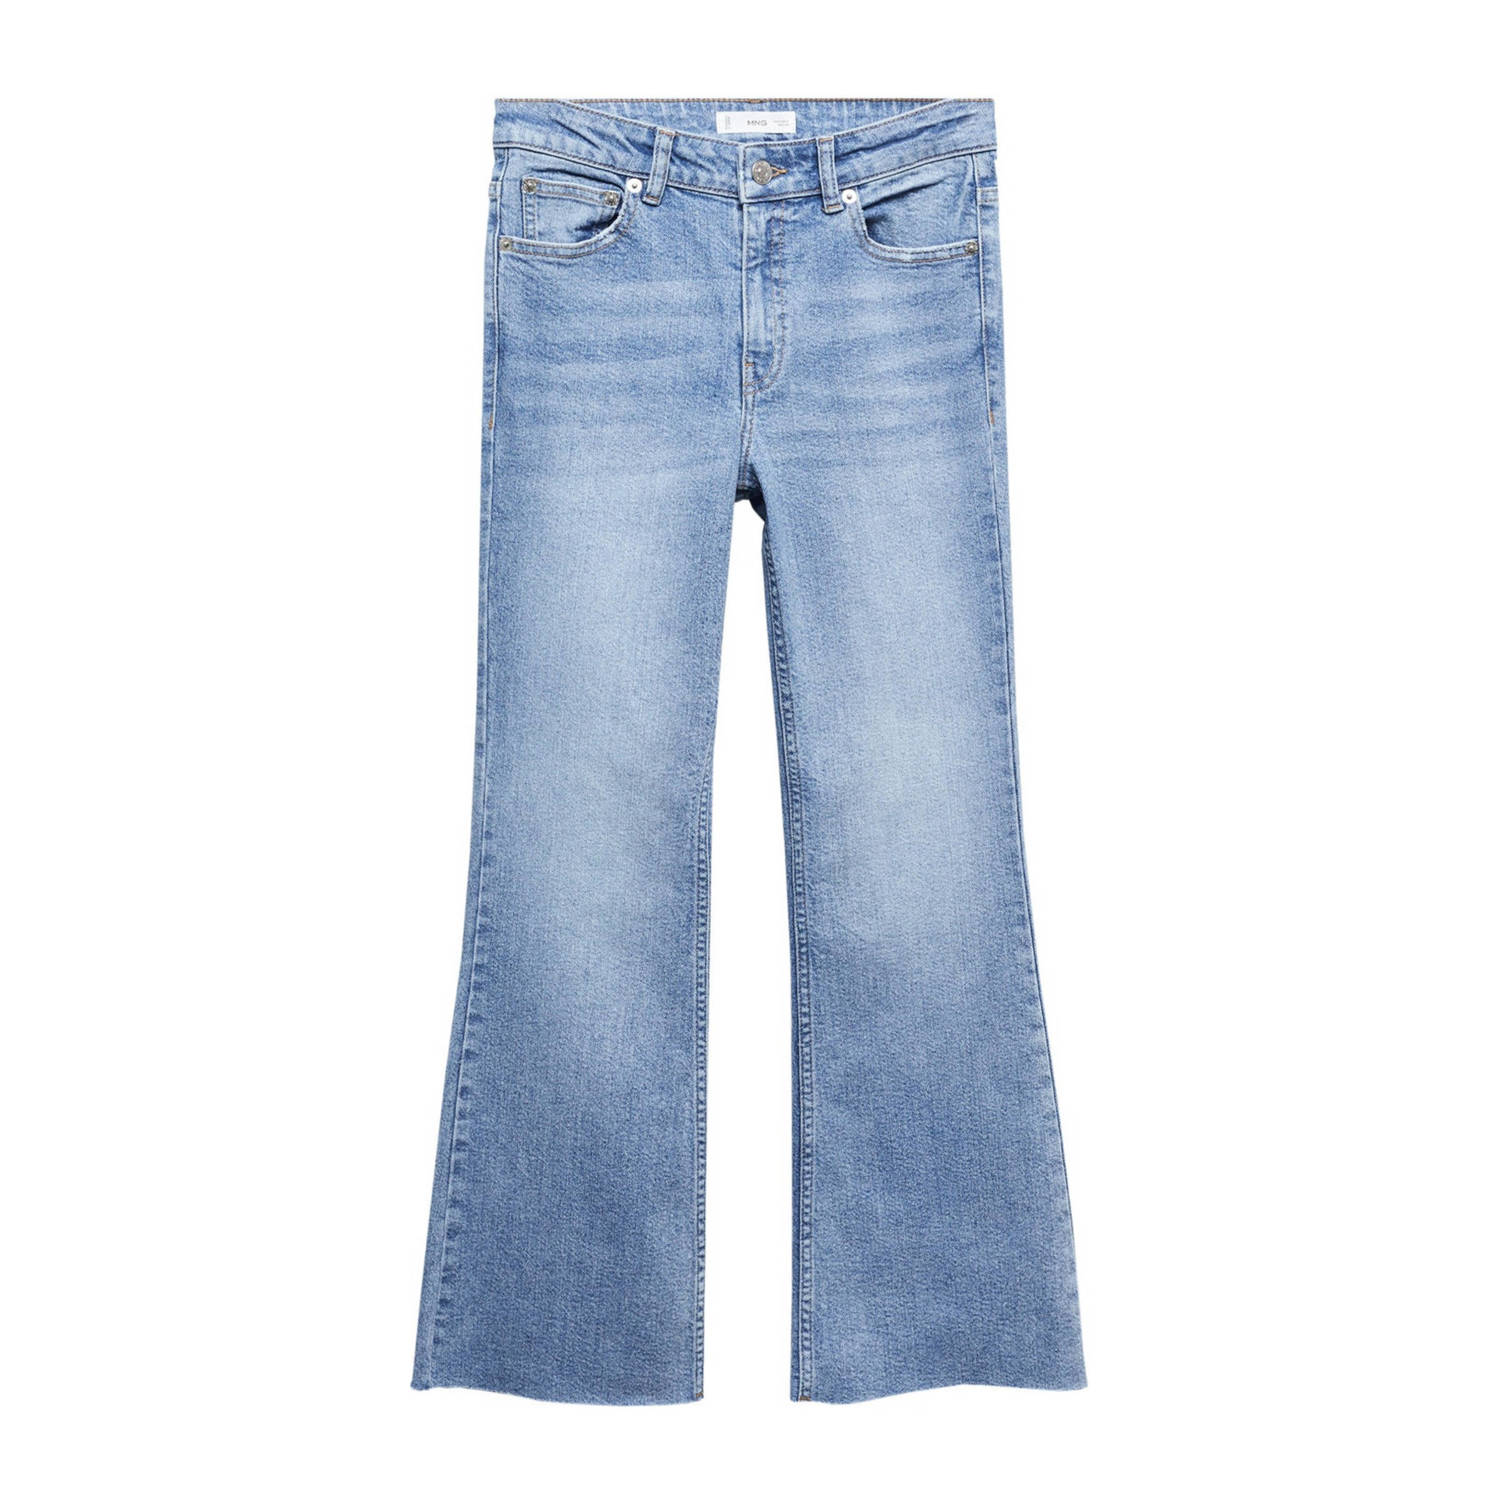 Mango Kids flared jeans light blue denim